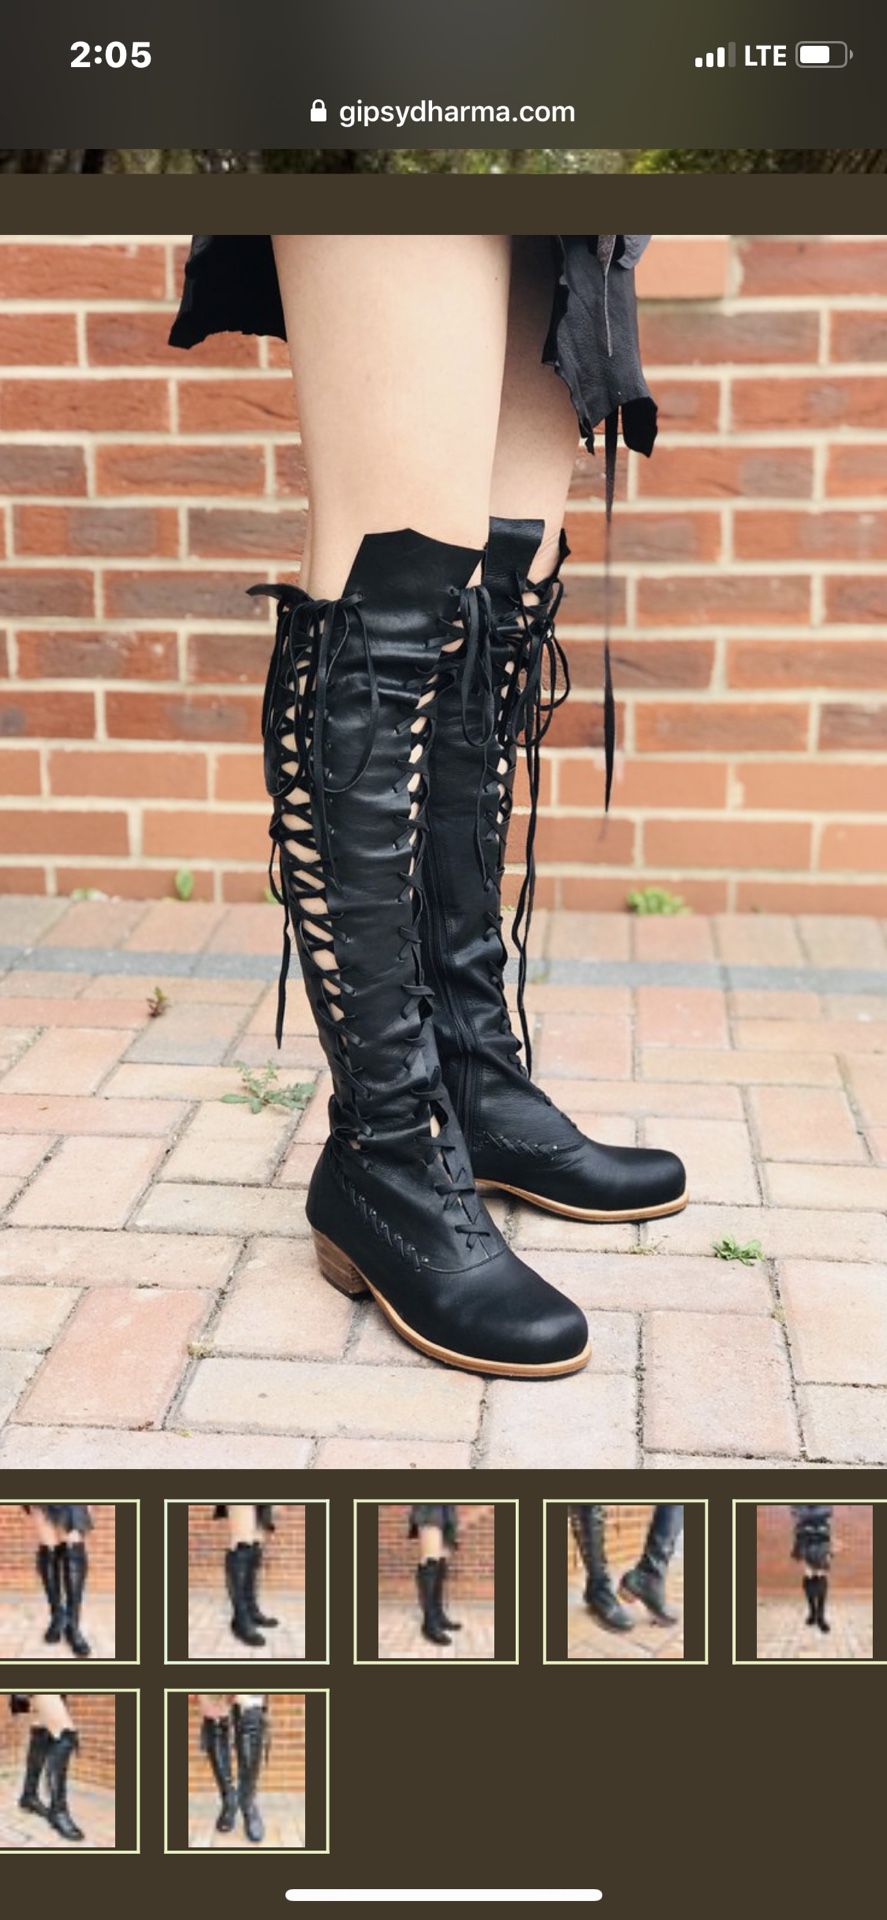 Gipsy dharma black knee high leather boots